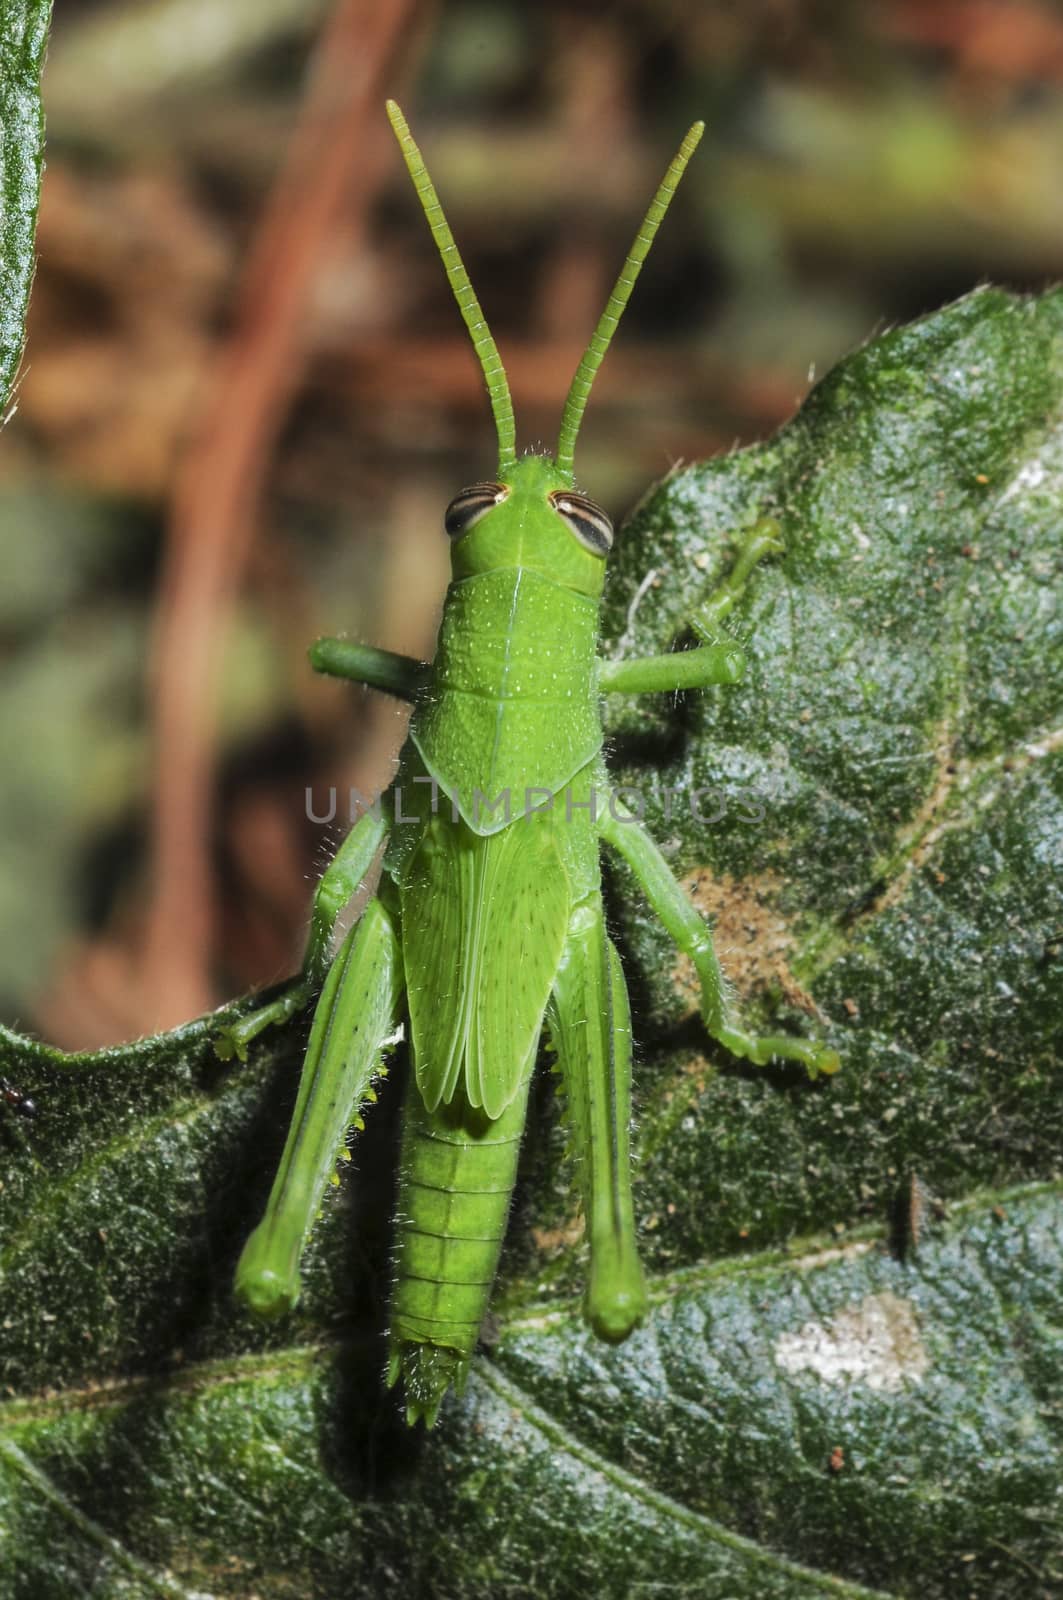 Full-body photo of grasshopper in habitat by Njean